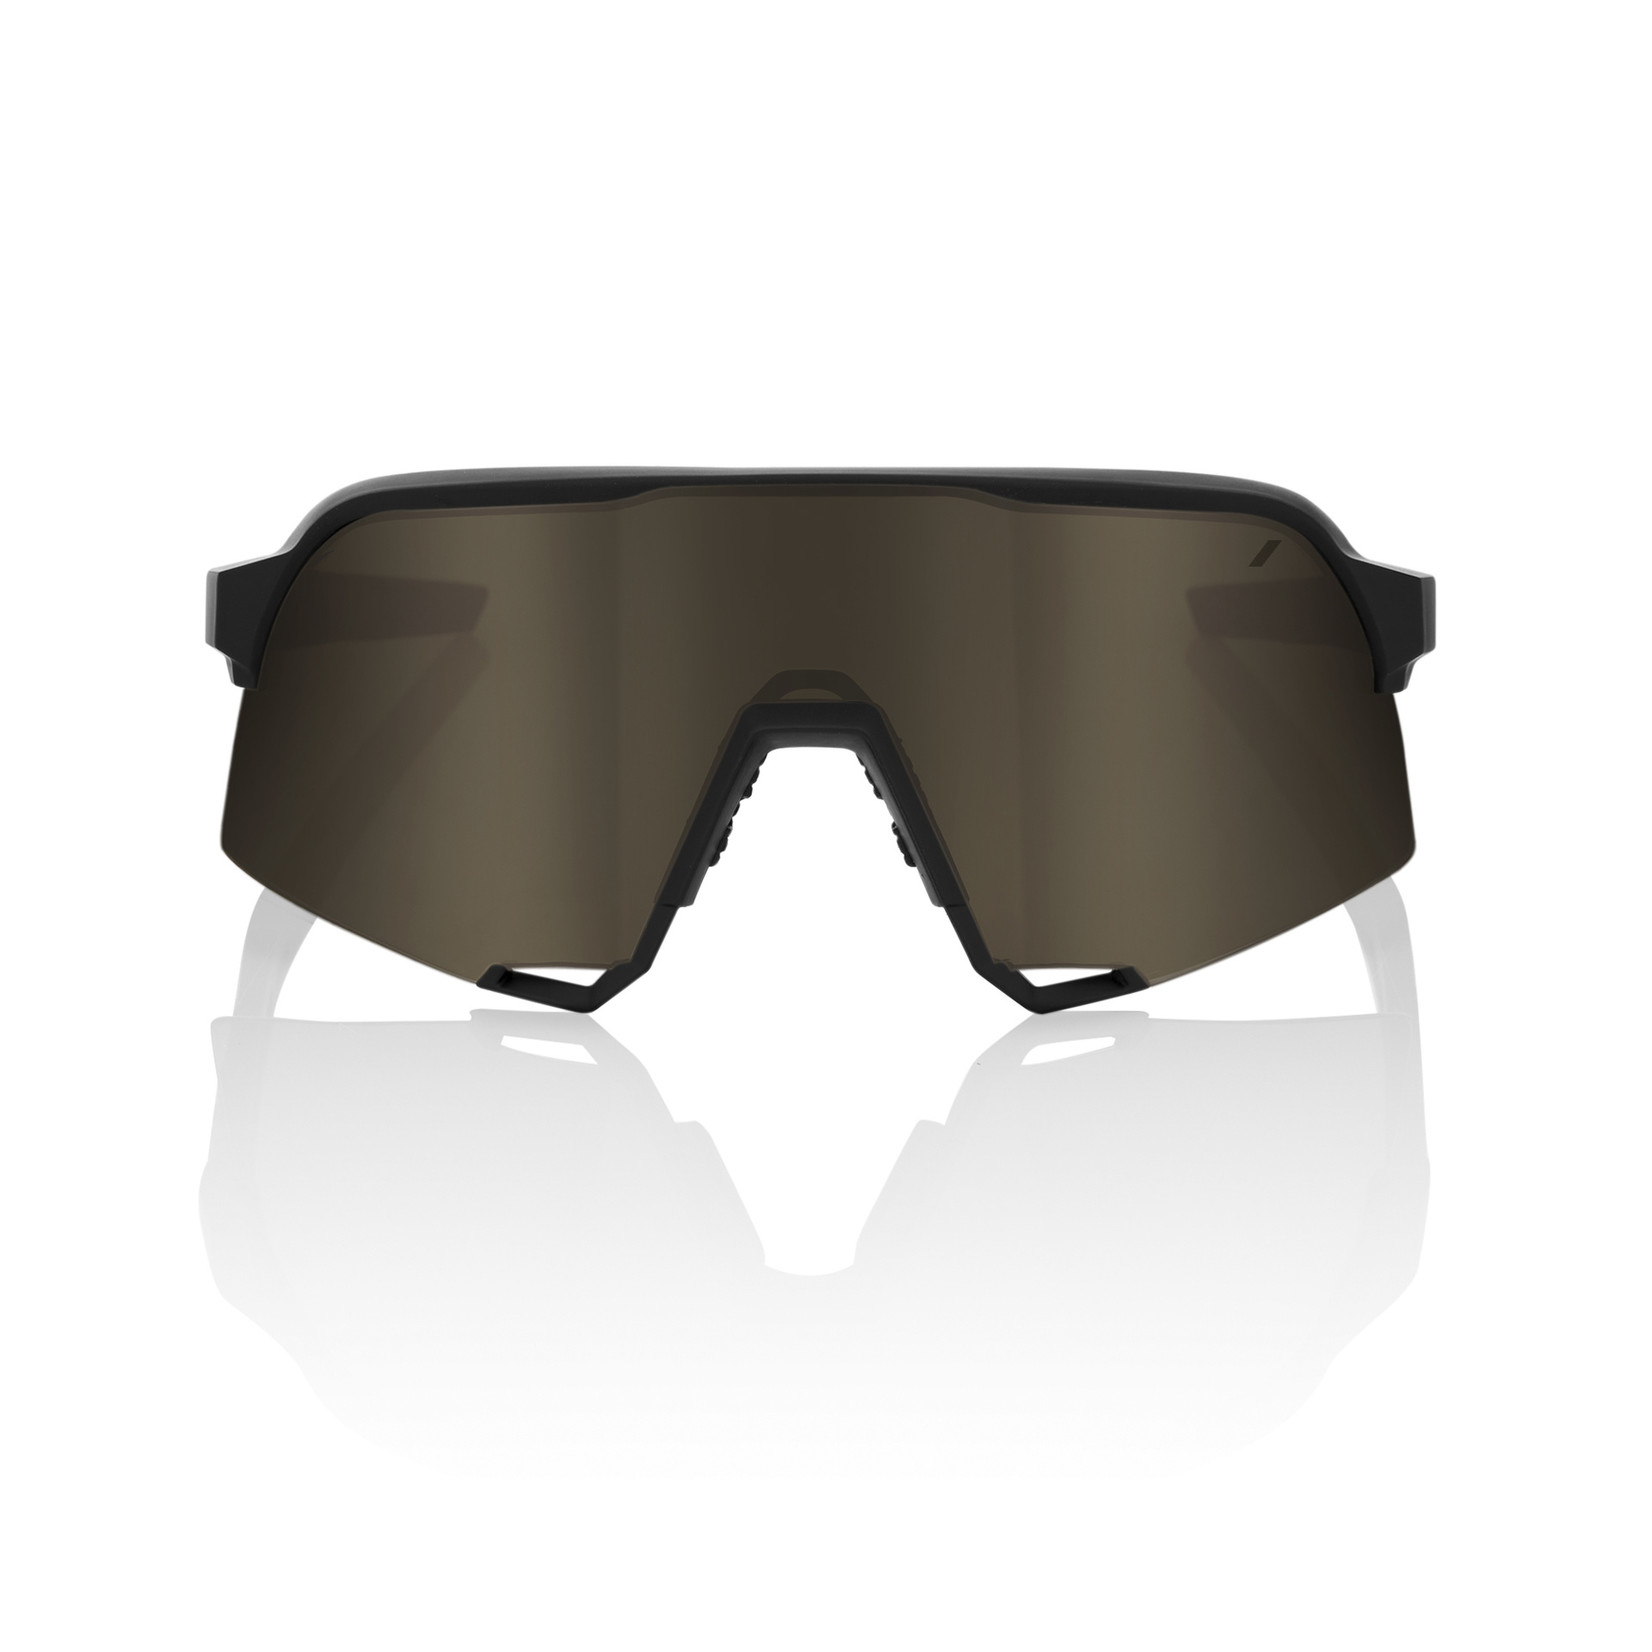 1 100% S3 Bike Sunglasses Soft Tact Black - Soft Gold